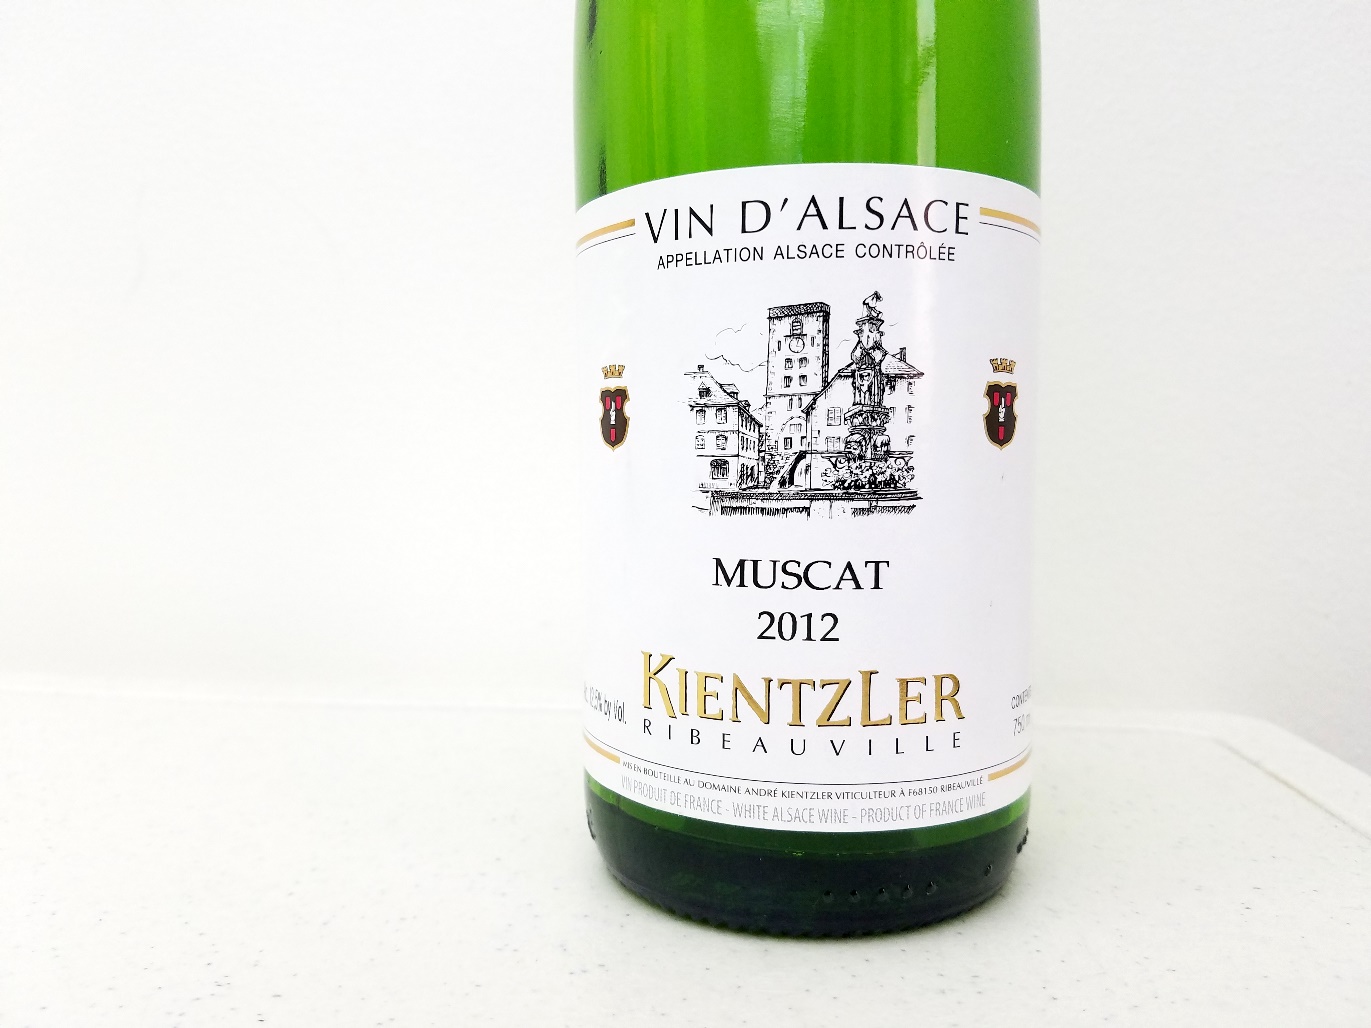 Domaine André Kientzler, Muscat 2012 Ribeauville, Alsace, France, Wine Casual